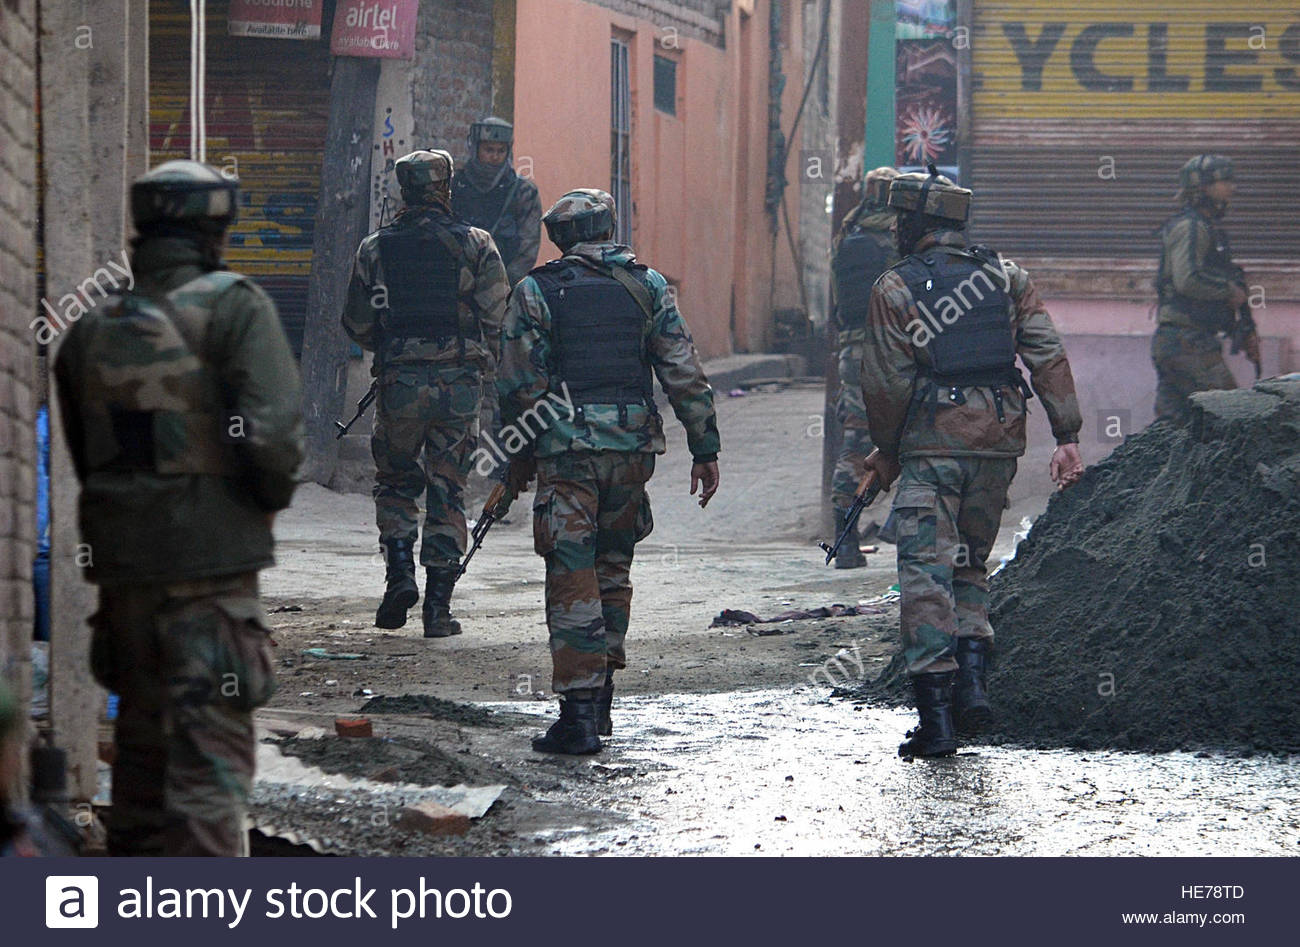 srinagar-india-17th-dec-2016-indian-army-soldiers-conducting-search-HE78TD.jpg